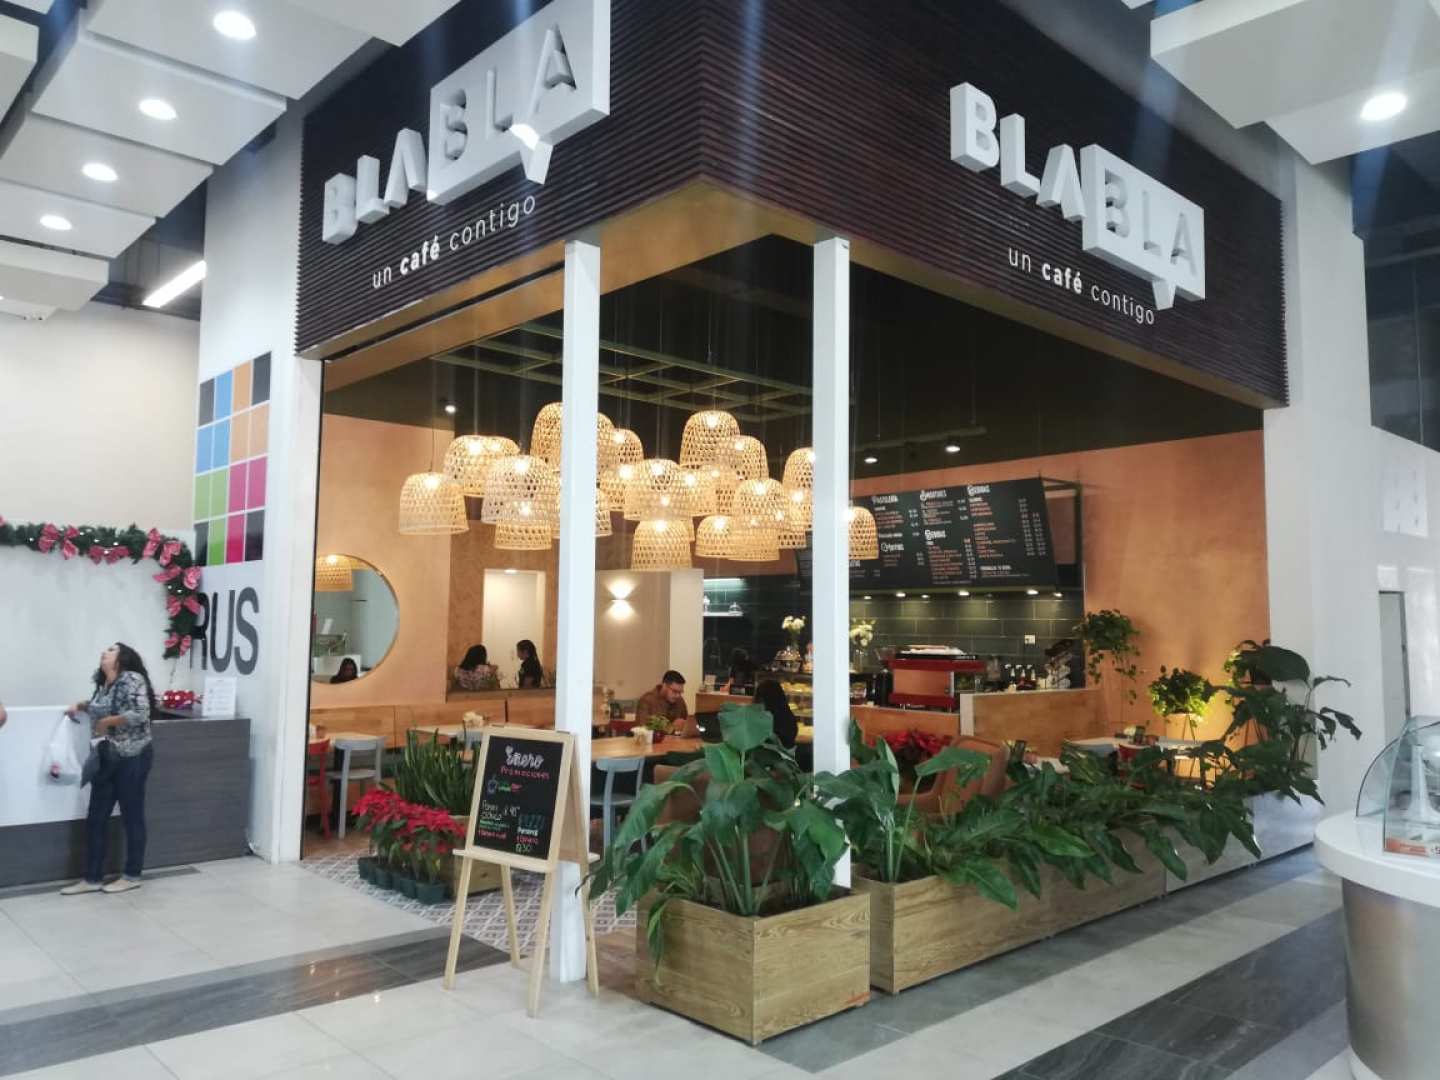 Bla Bla Café